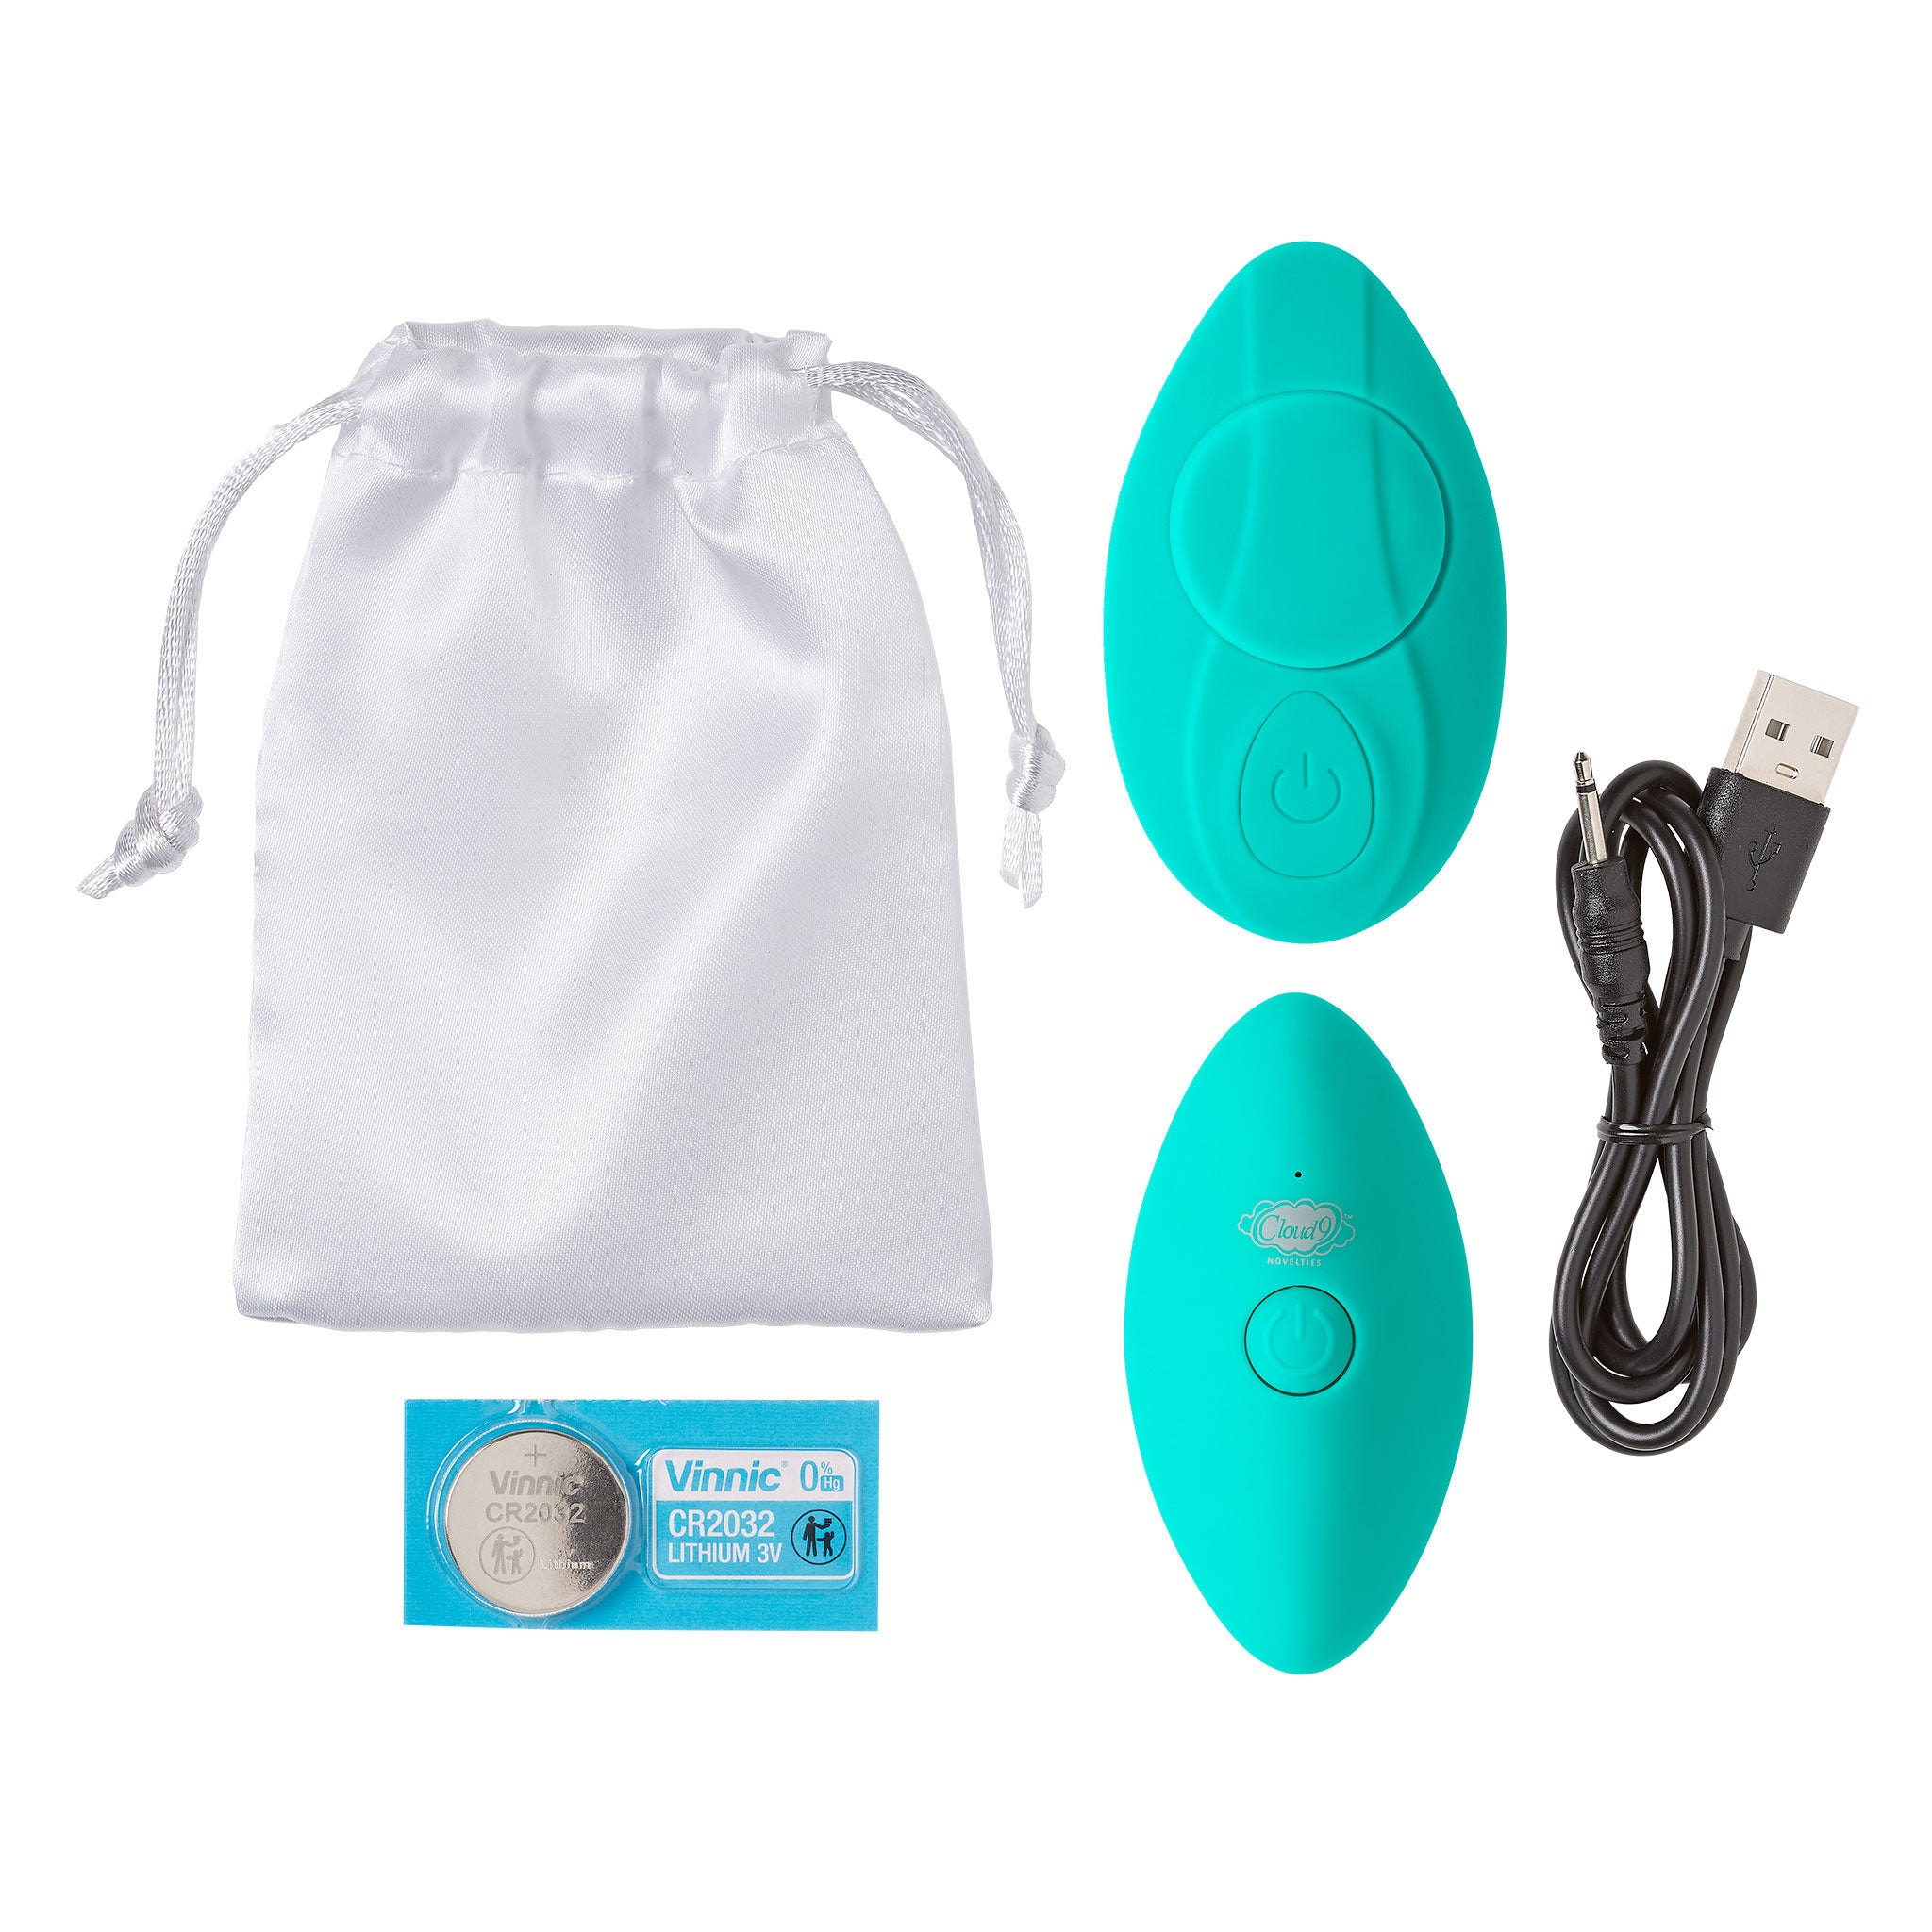 Cloud 9 Novelties Pleasure Panty Vibrator Teal - Remote Control, 10 Vibrating Patterns, Ergonomic Design